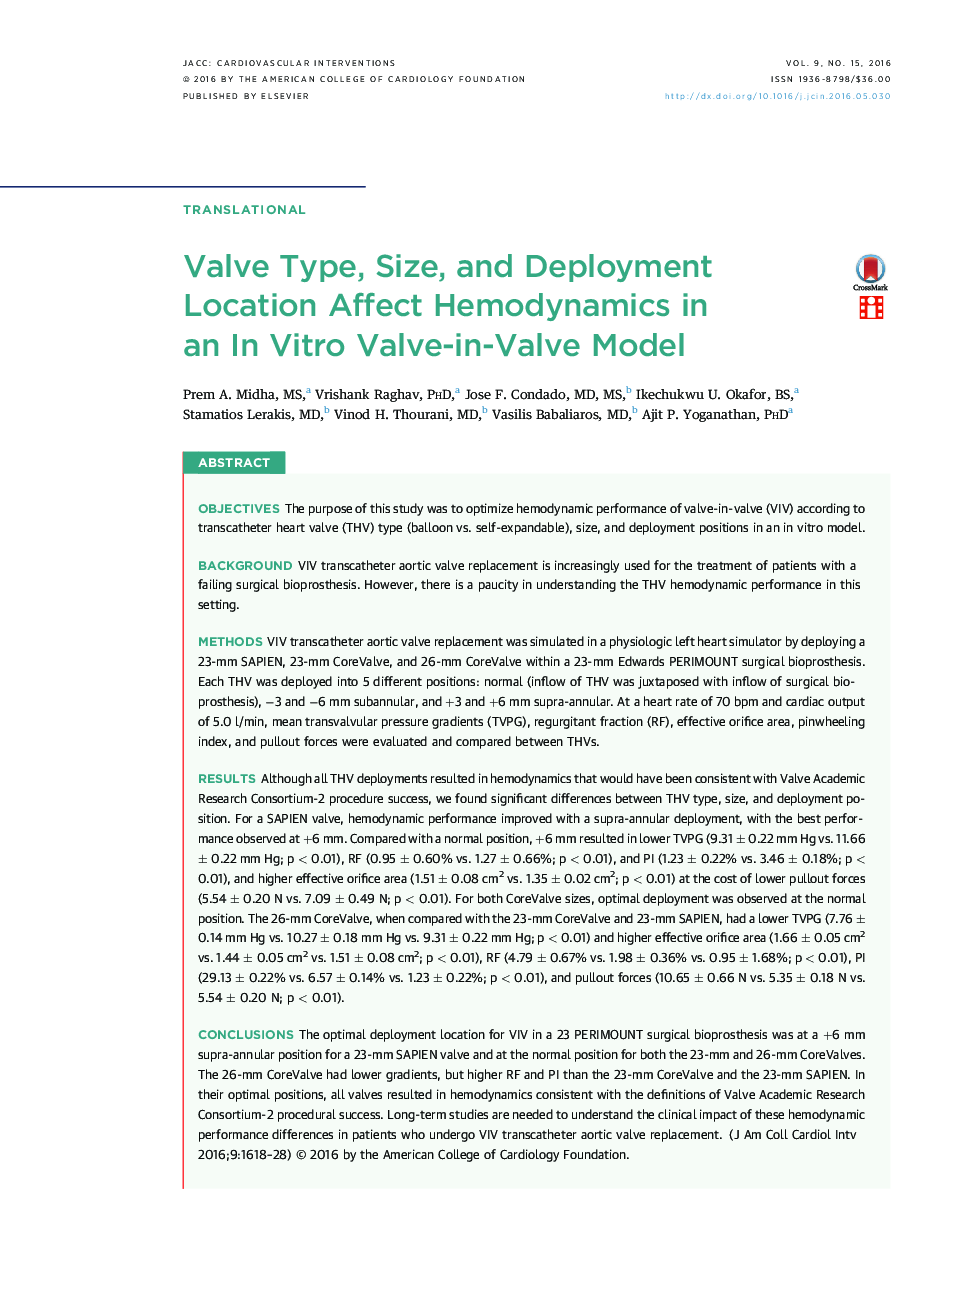 Valve Type, Size, and Deployment Location Affect Hemodynamics in an In Vitro Valve-in-Valve Model 